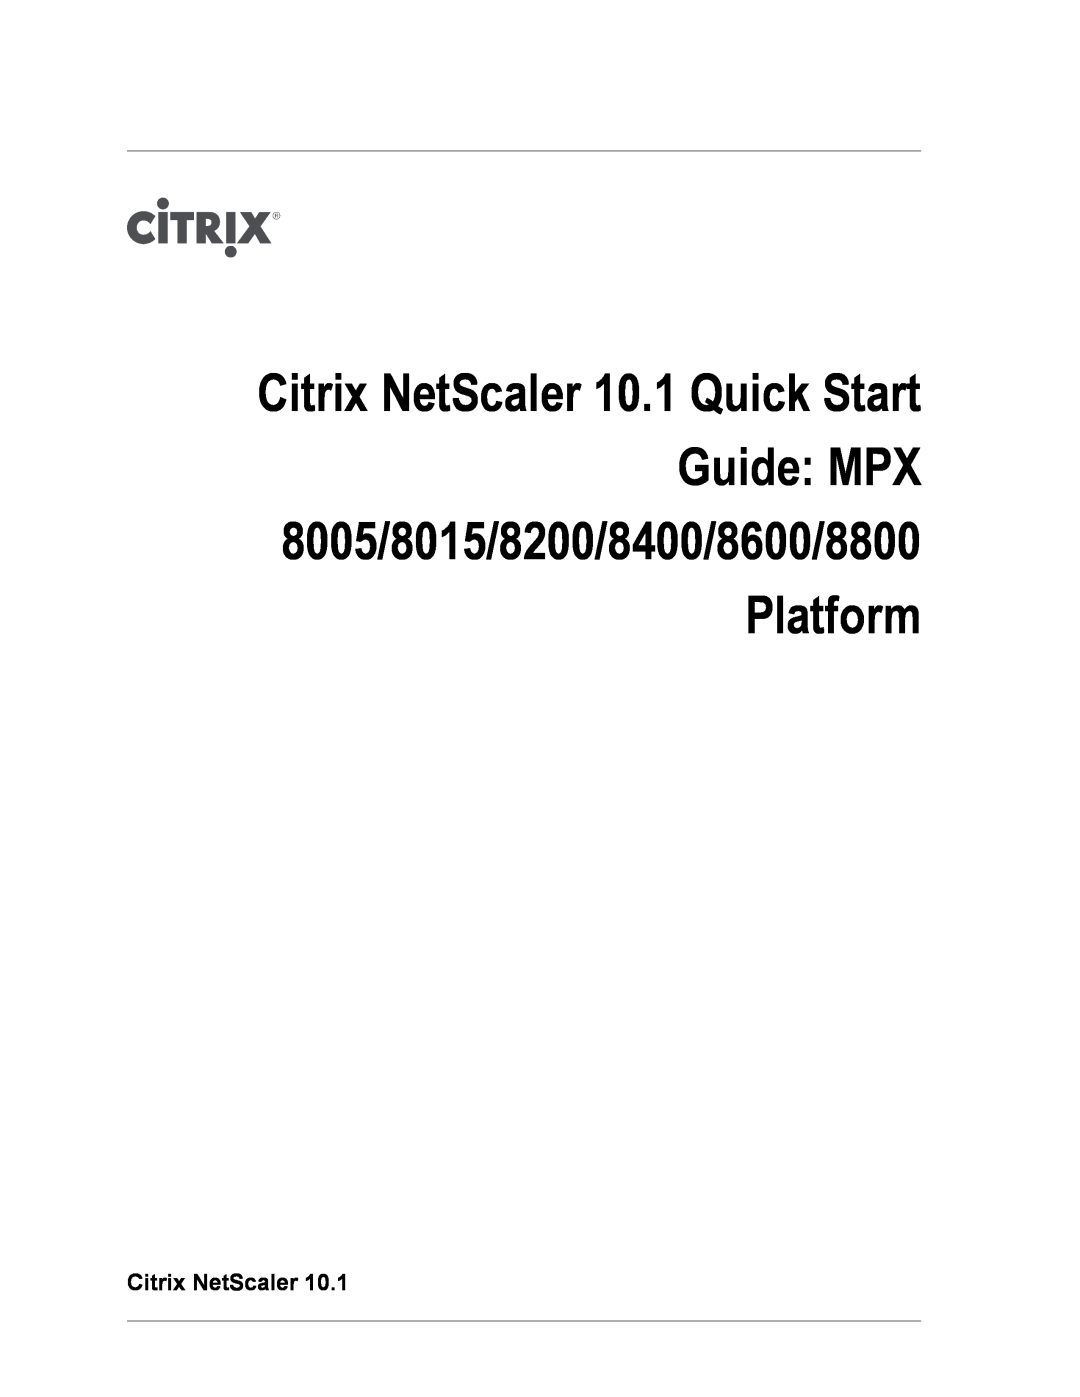 Citrix Systems 8600, 8800, 8200, 8005, 8400, 8015 quick start Citrix NetScaler 